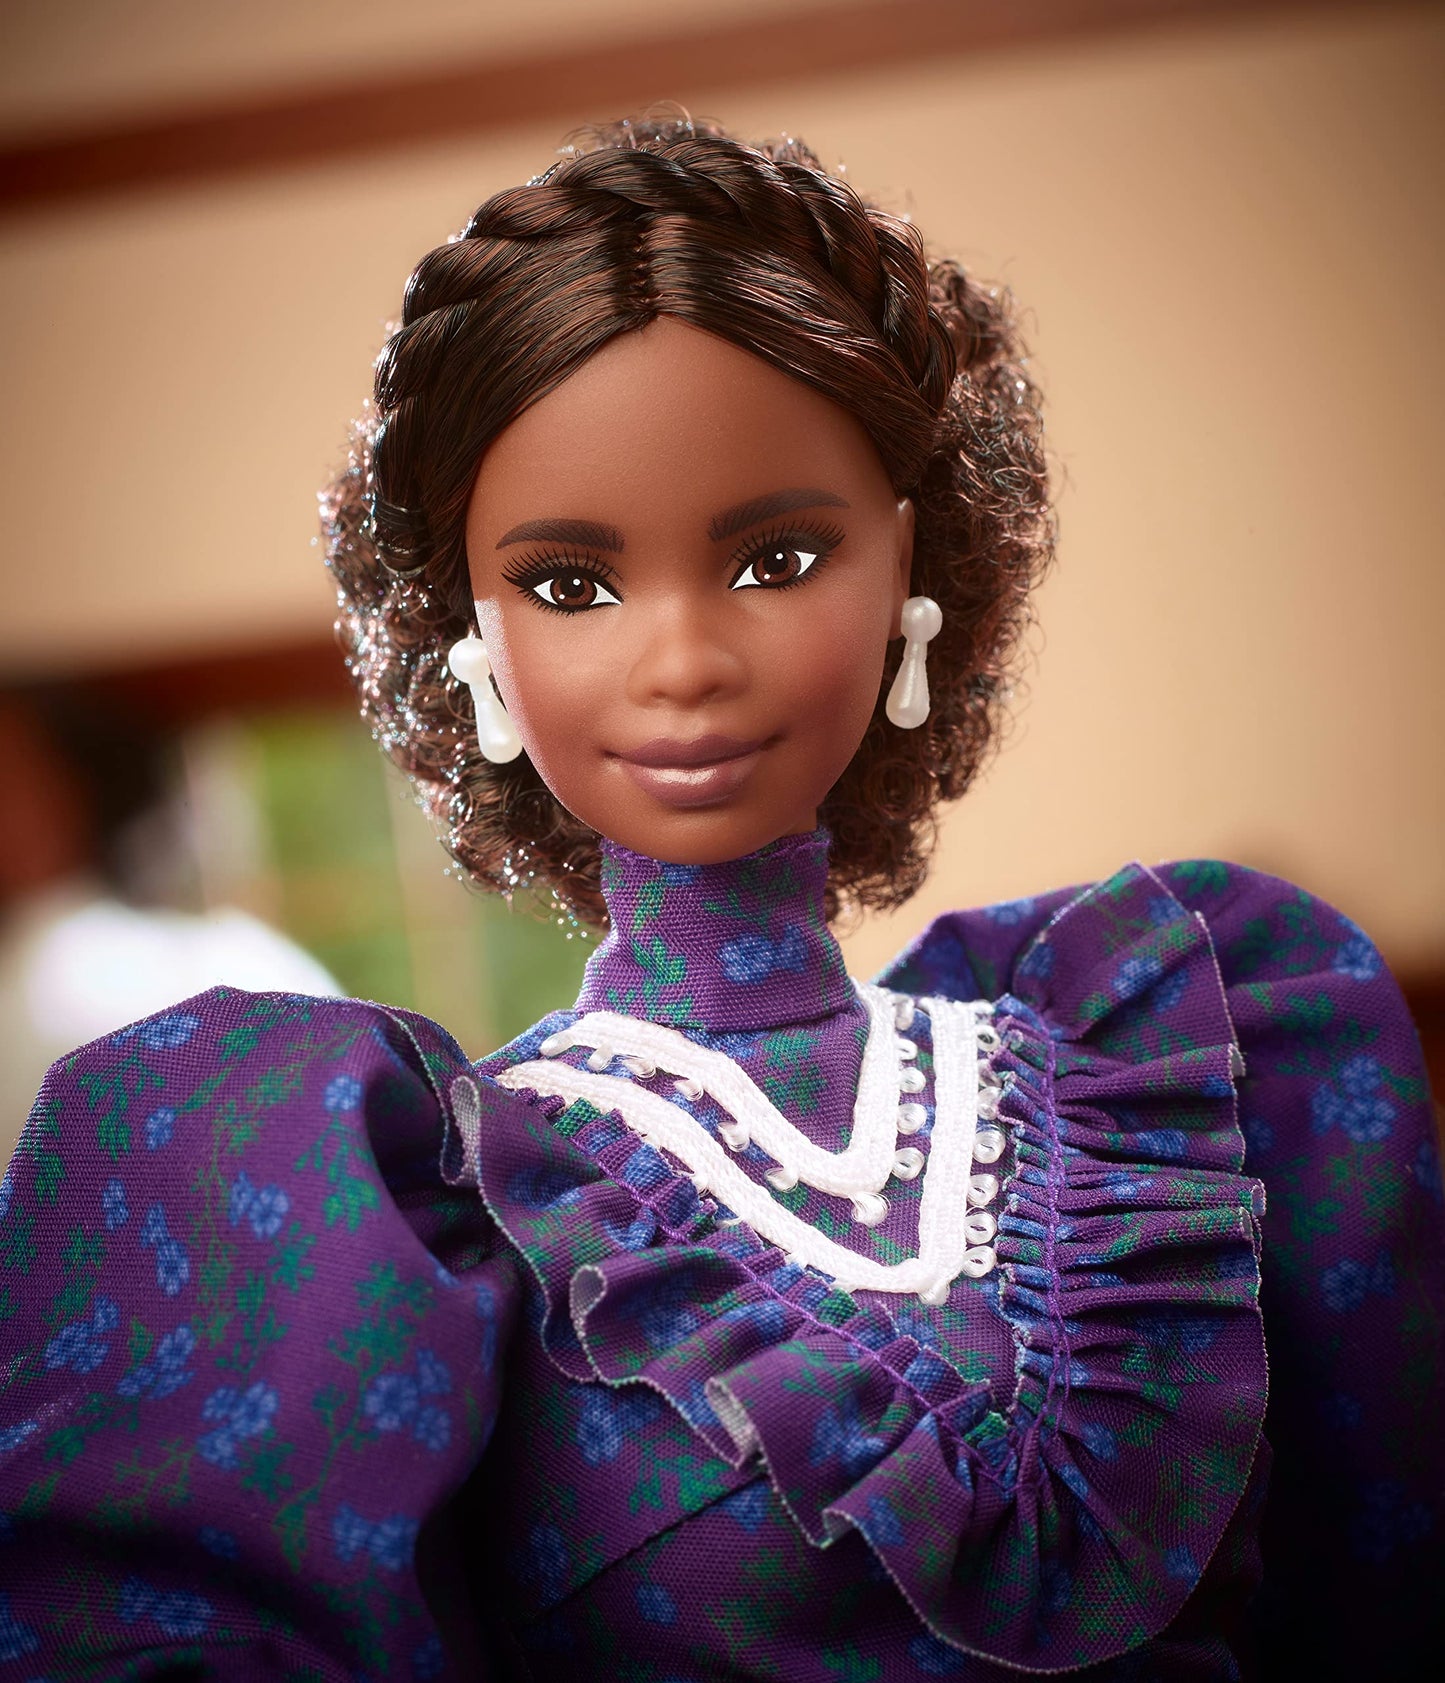 Barbie Signature Madam C.J. Walker Inspiring Women Doll with Accessories & Doll Stand